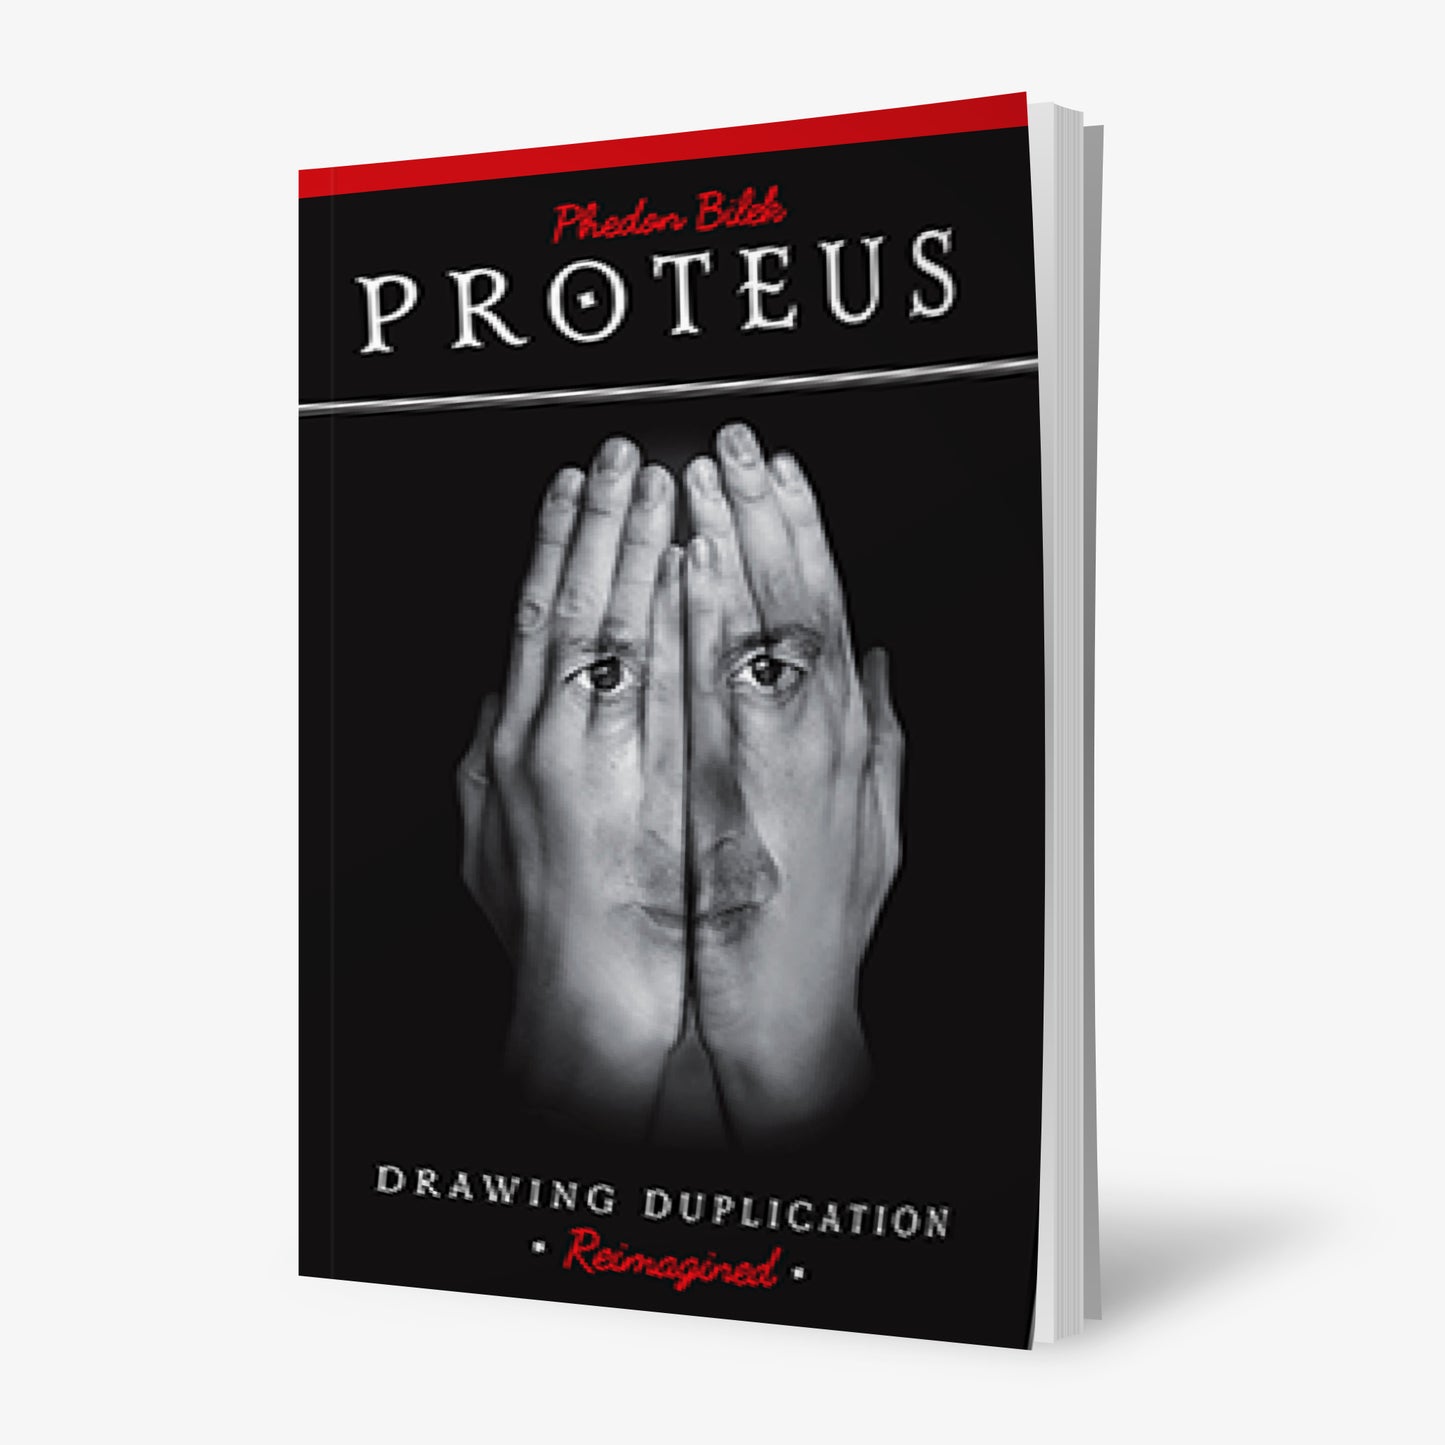 Proteus by Phedon Bilek